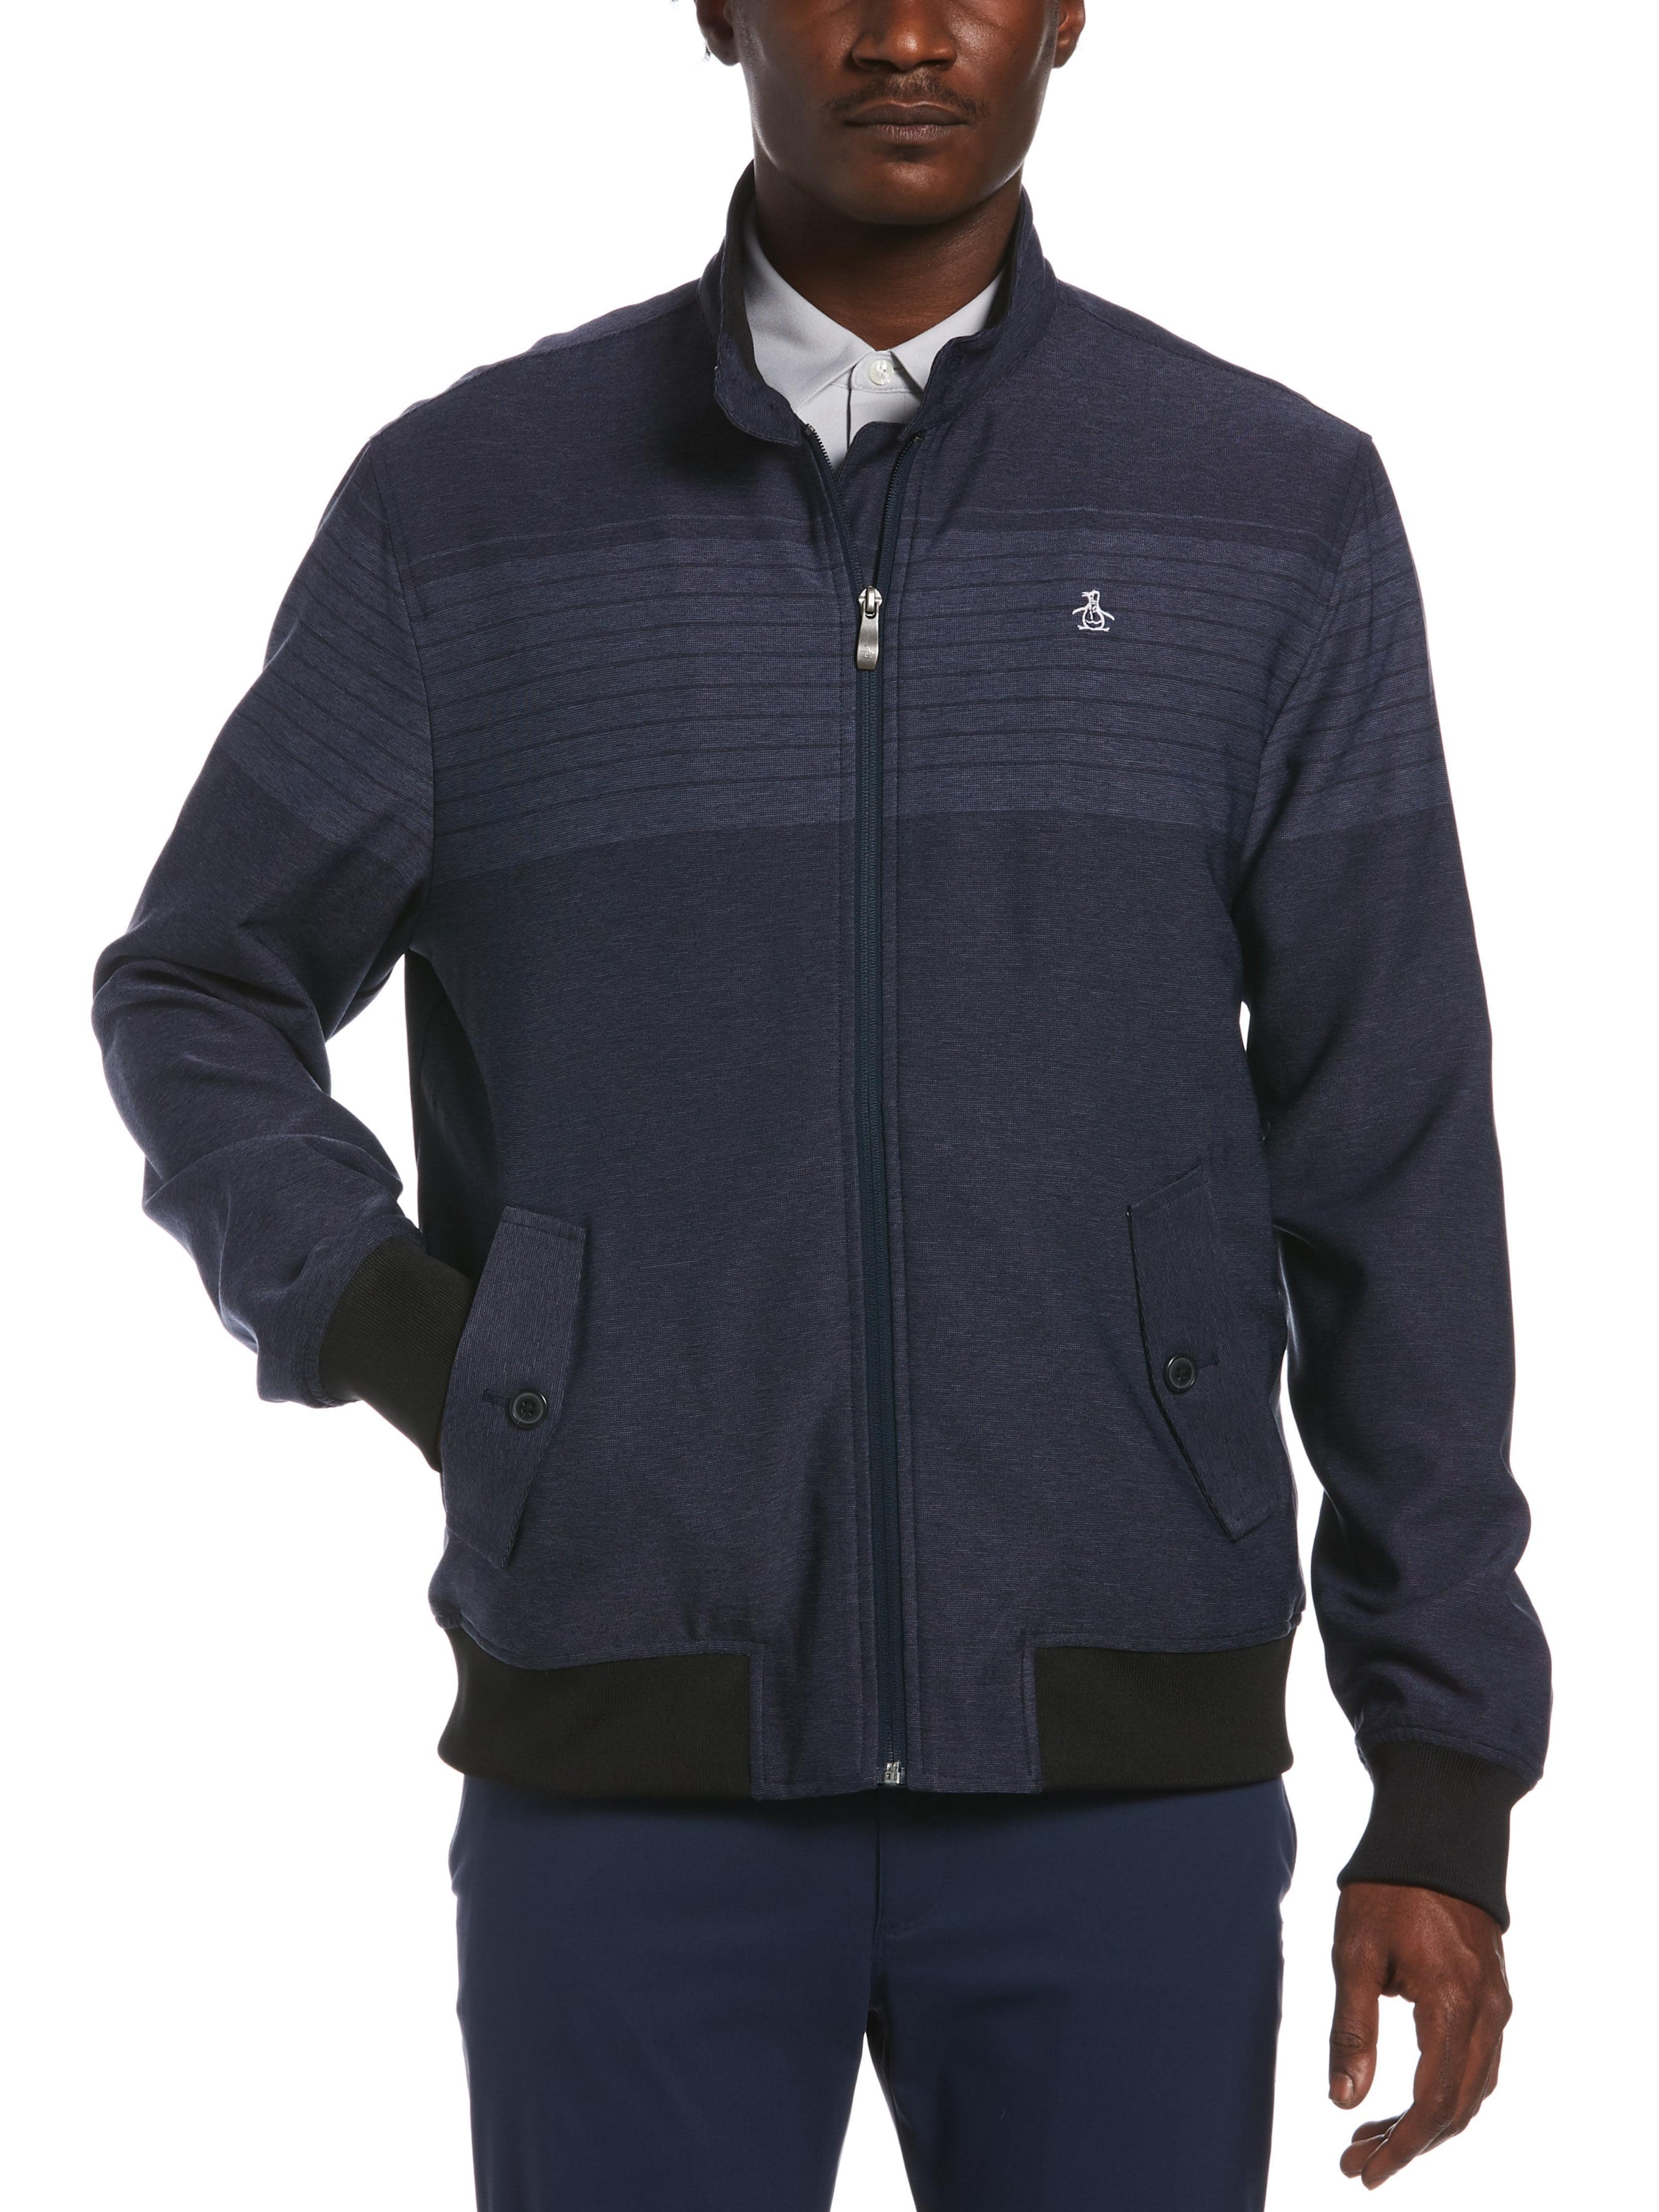 Original Penguin Mens Dobby Golf Jacket Top, Size 2XL, Black Iris Bijou Hthr Blue, Polyester/Elastane | Golf Apparel Shop